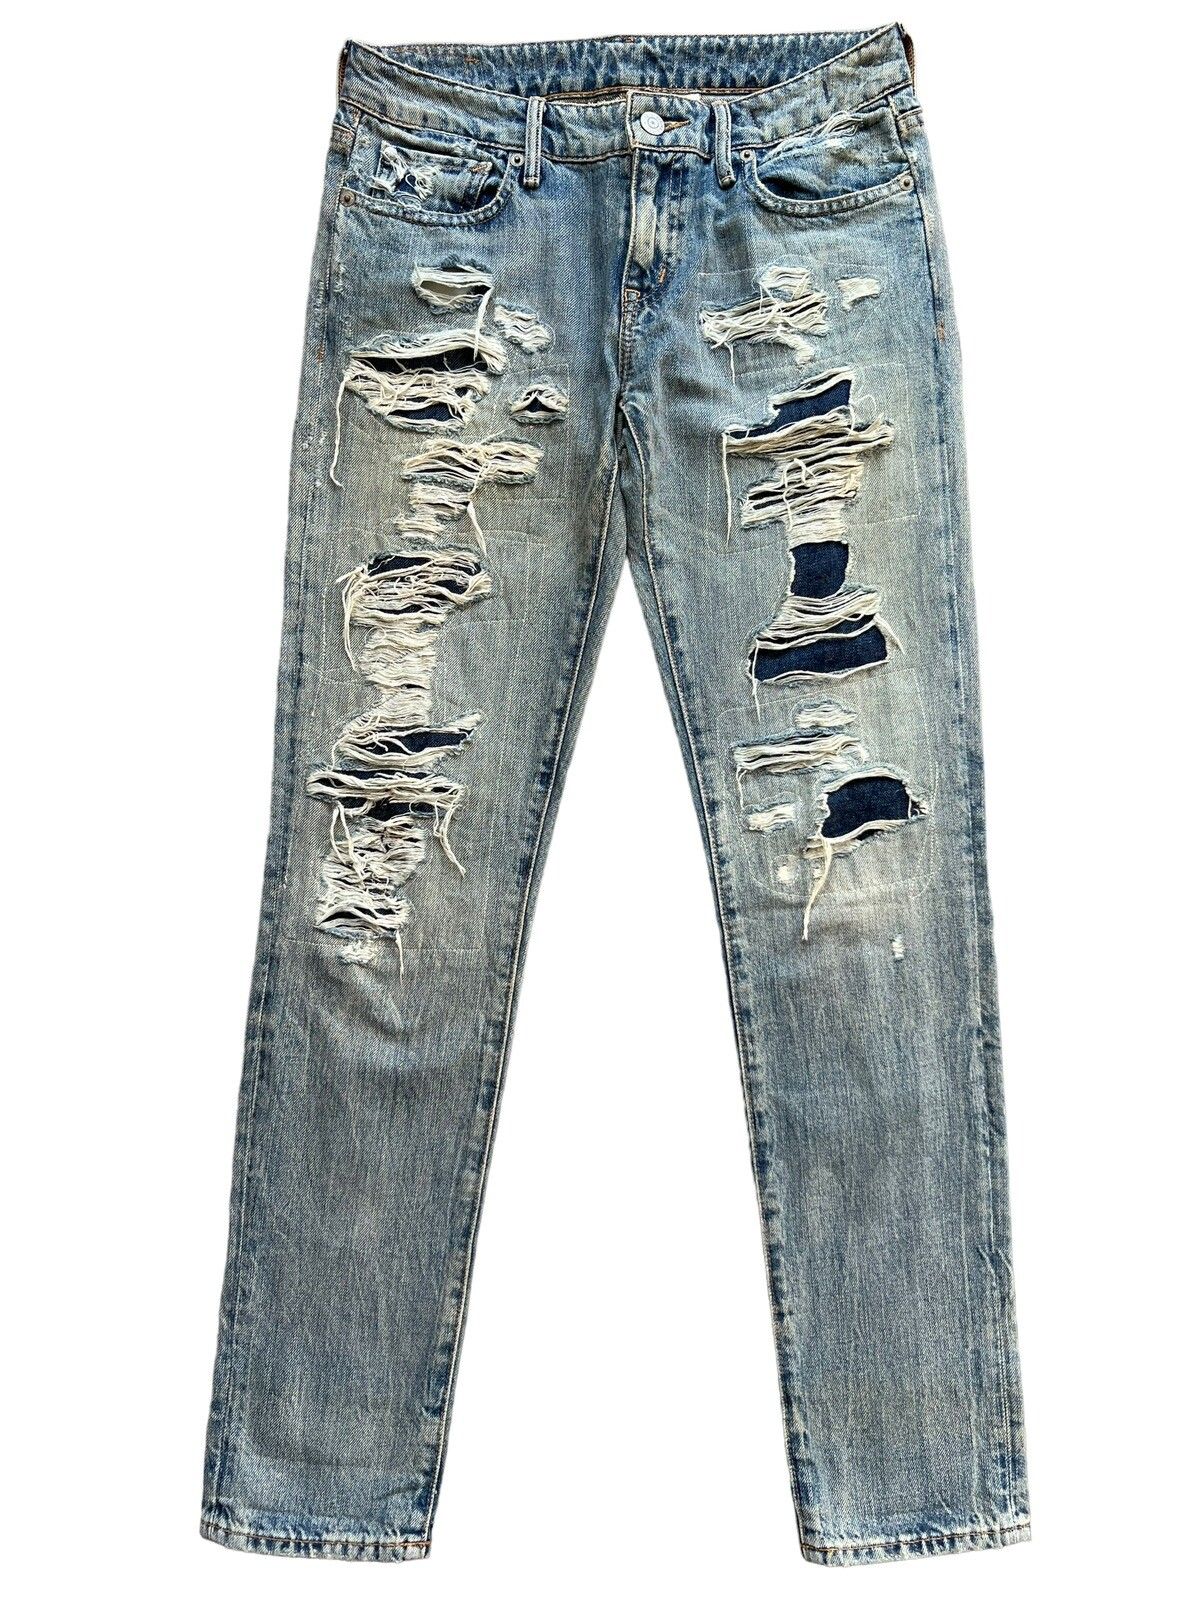 Ralph Lauren Rusty Ripped Distressed Denim Jeans 28x29 - 2